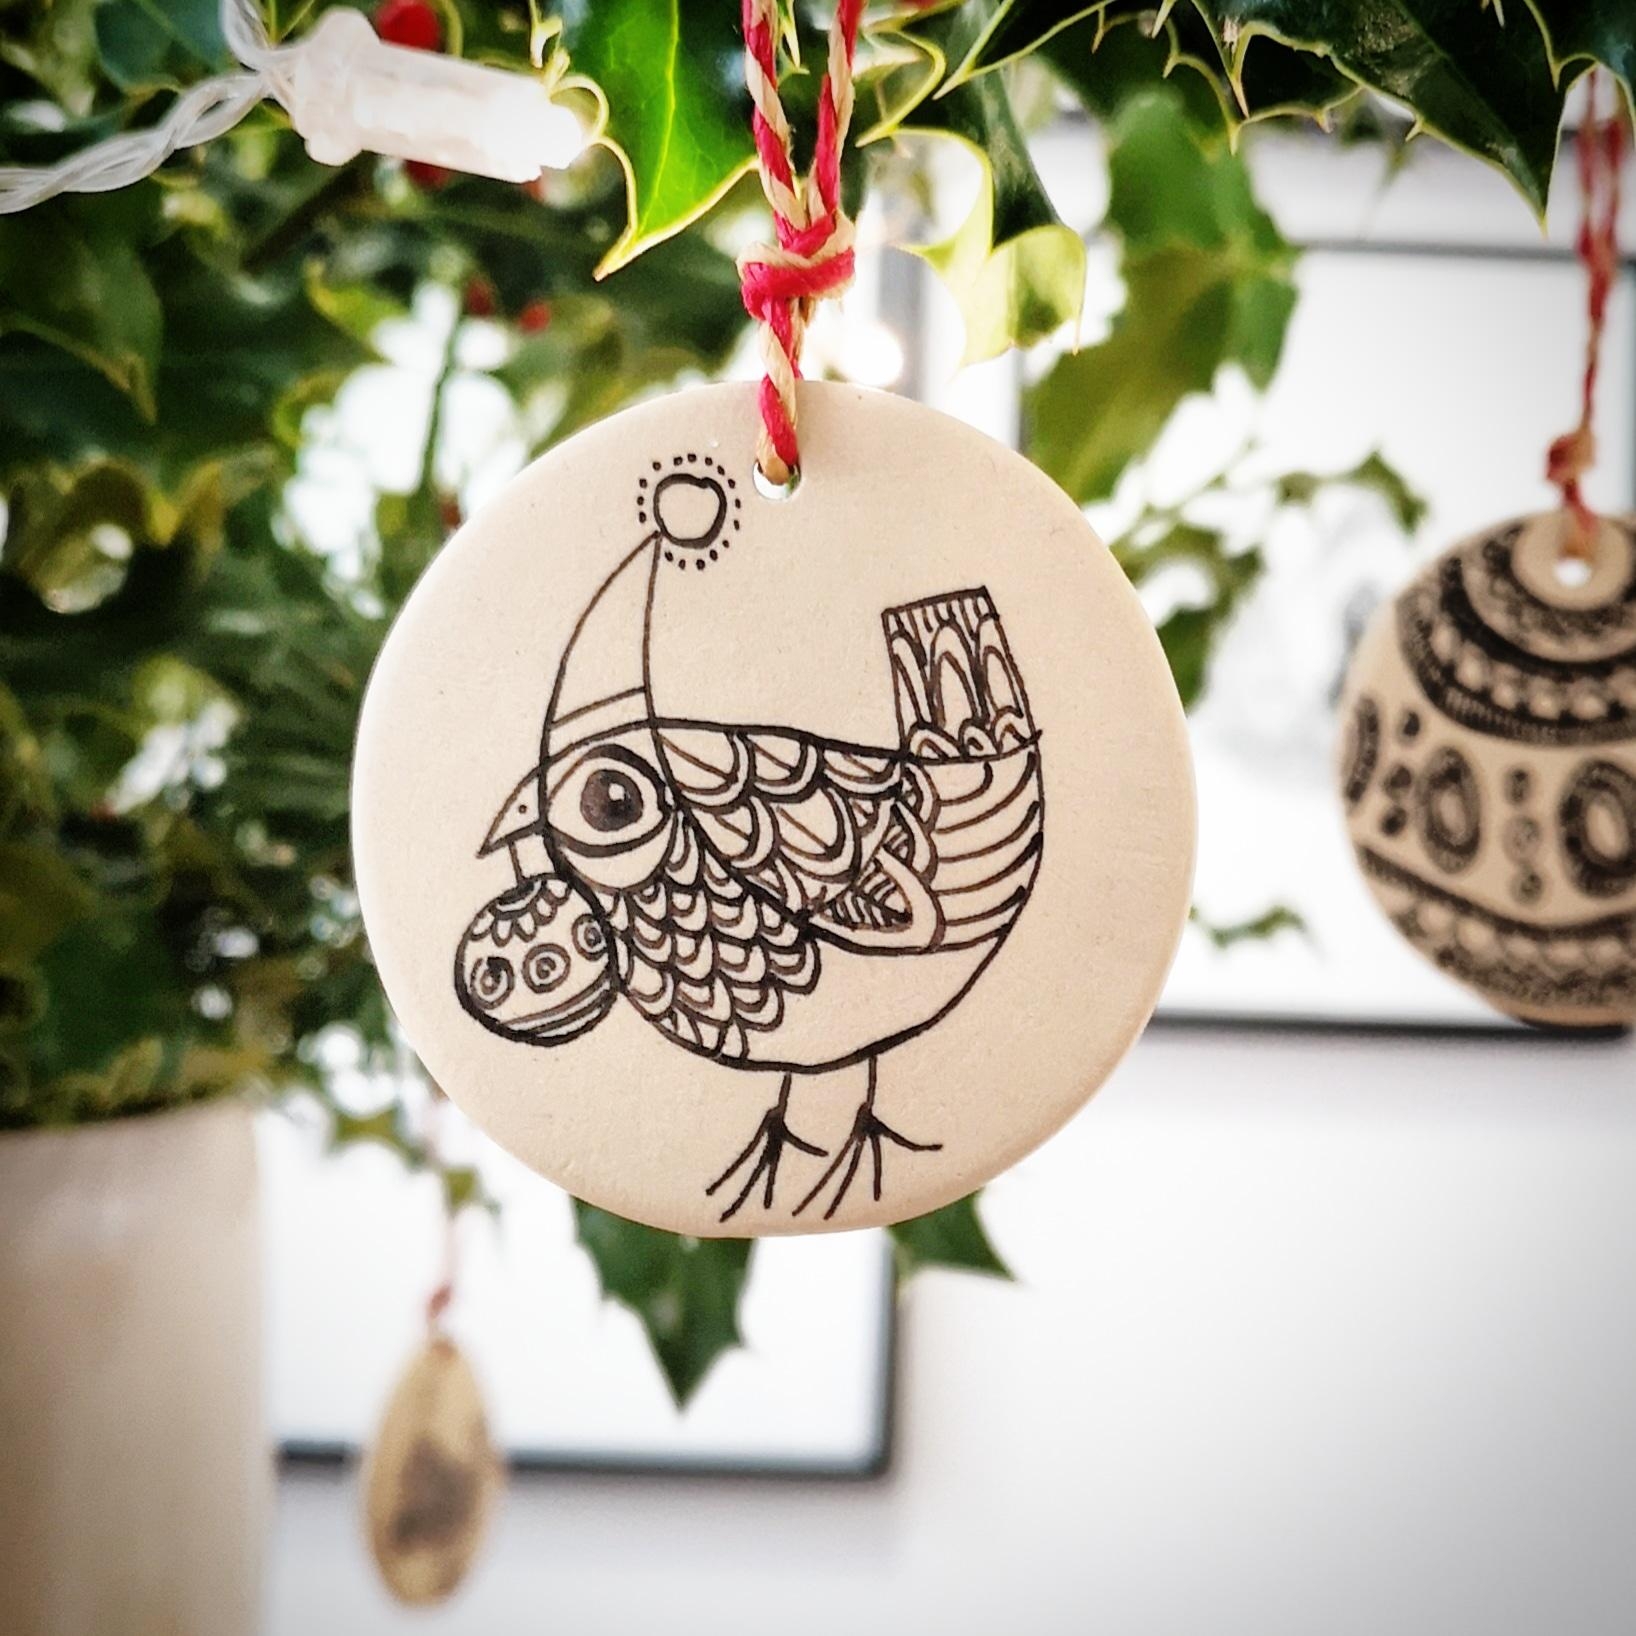 Stoneware ornaments hand-decorated be me. Fun to make.

#christmas #weihnachtsdeko #ceramics #keramik #diy